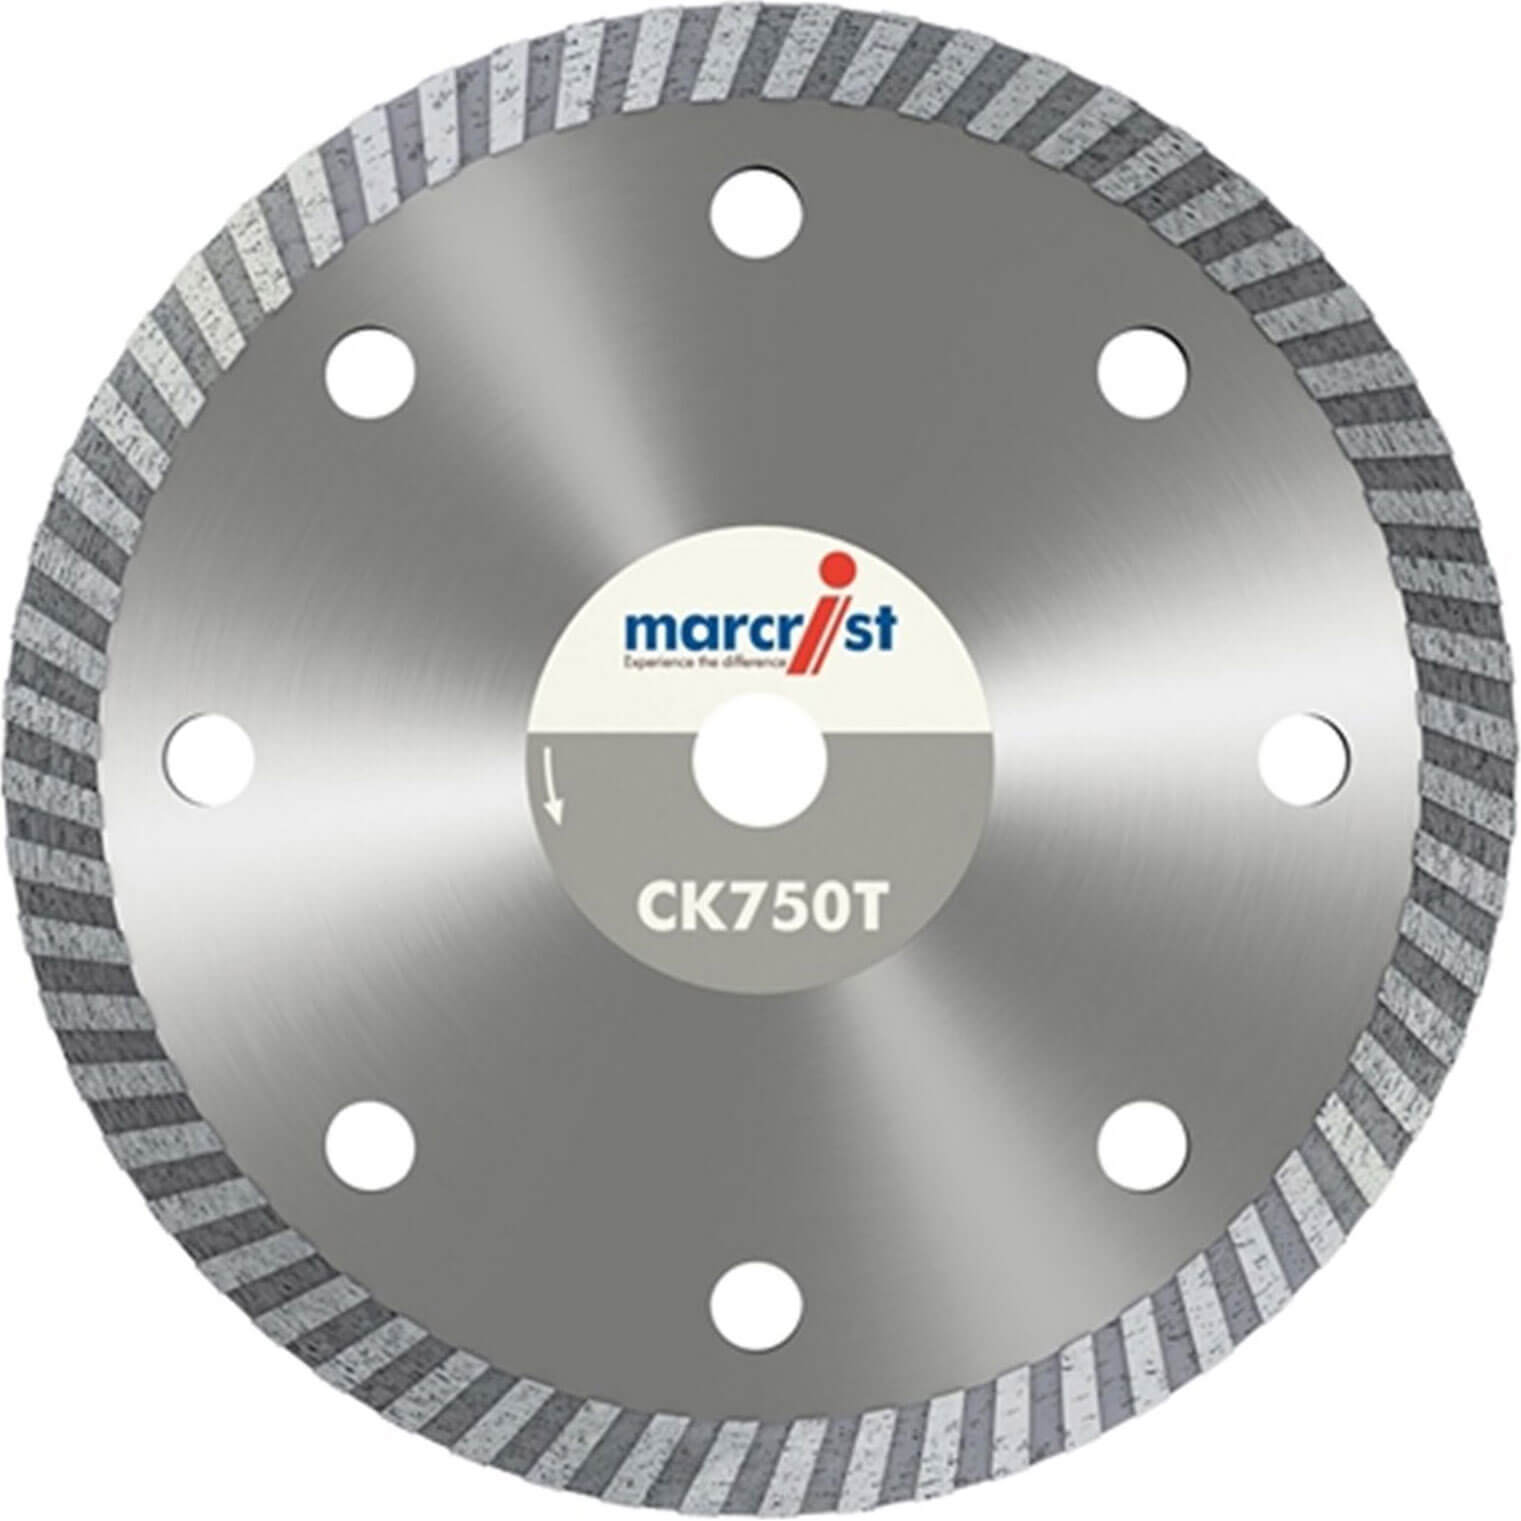 Photo of Marcrist Ck750t Ultra Thin Turbo Tile Diamond Cutting Disc 230mm